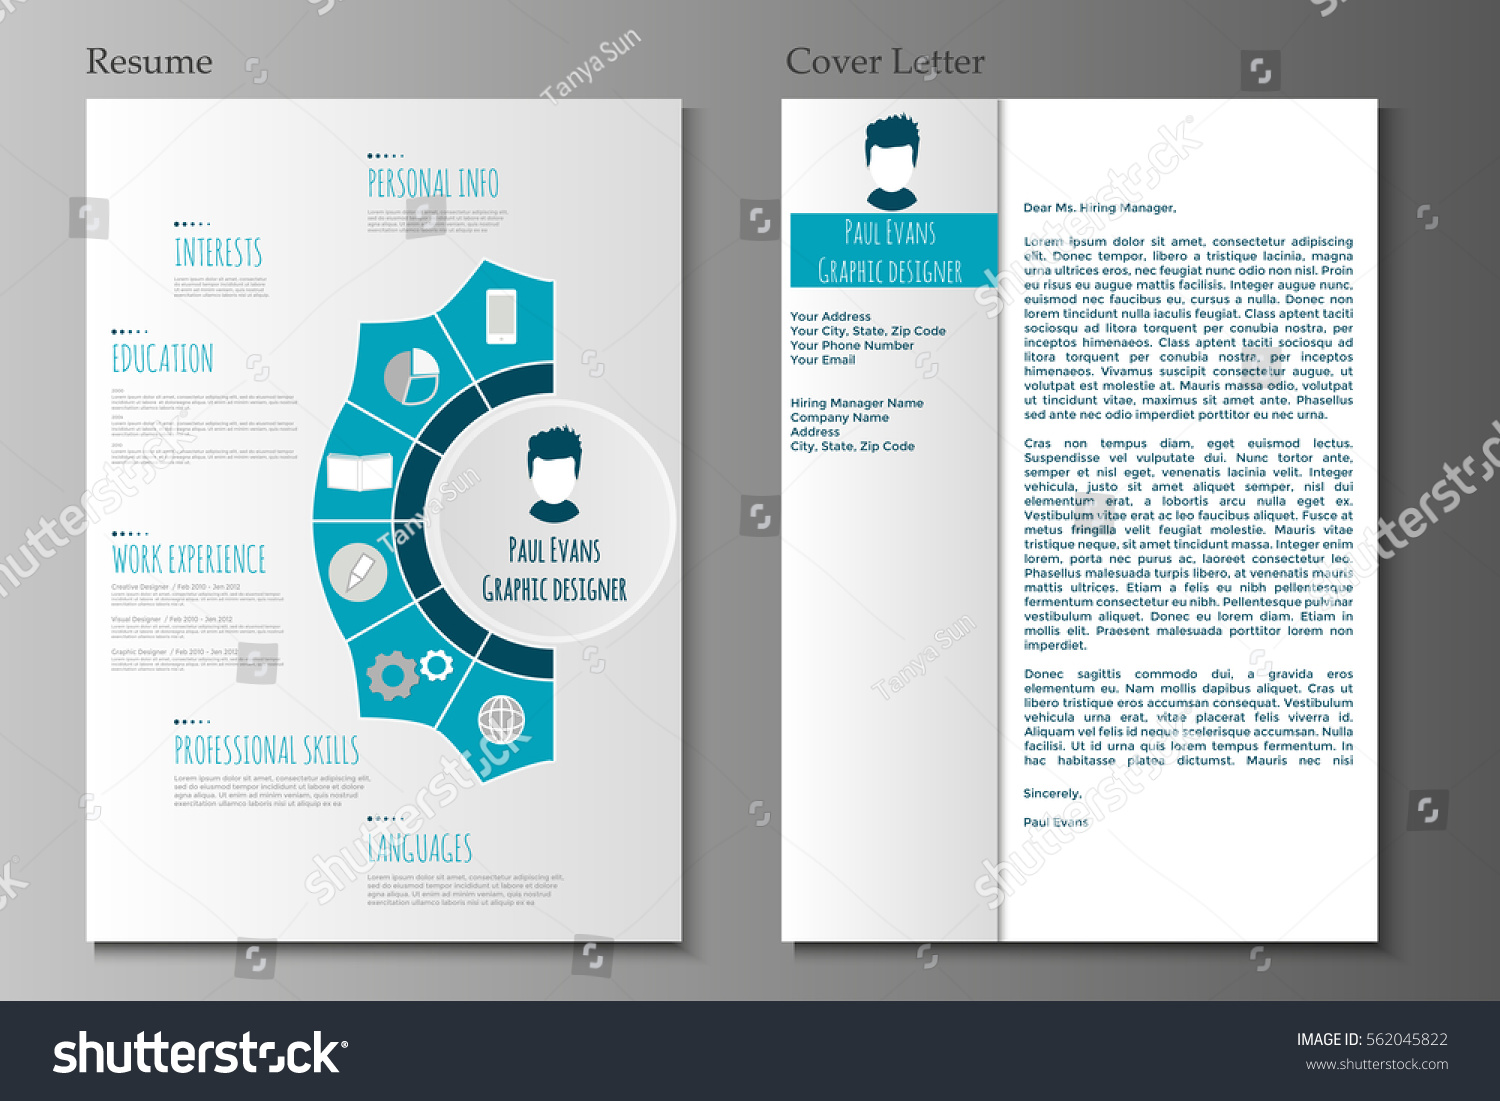 resume cover letter flat style design stock vector